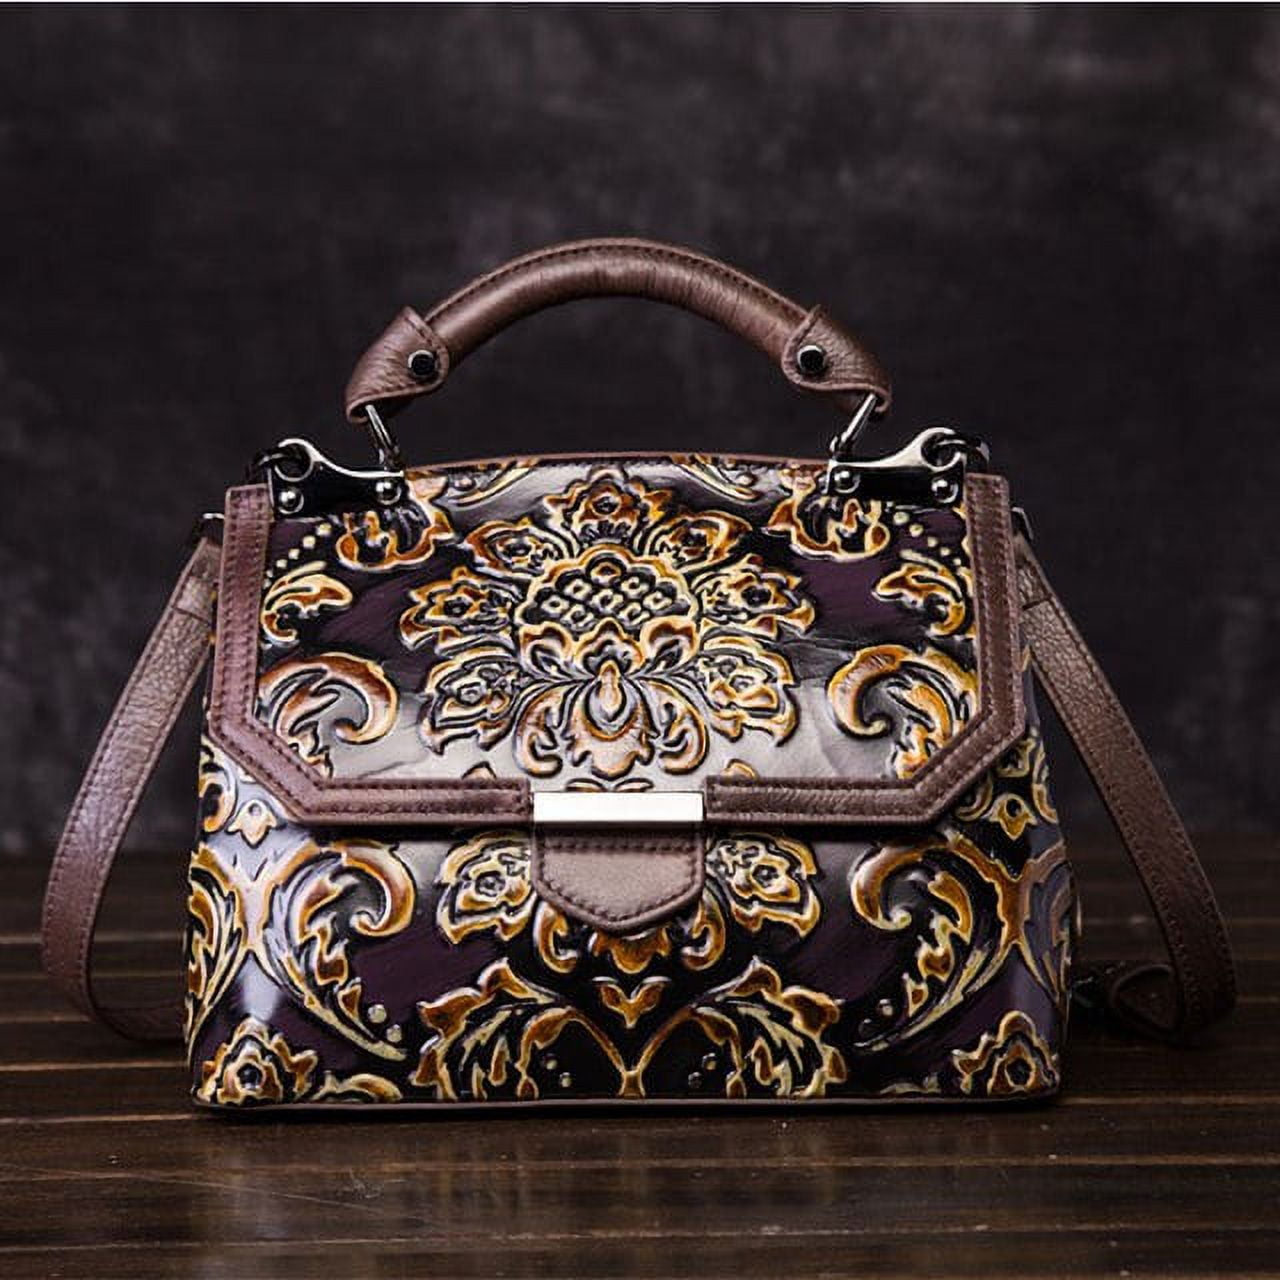 Cocopeaunts Women's Luxury Leather Handbag